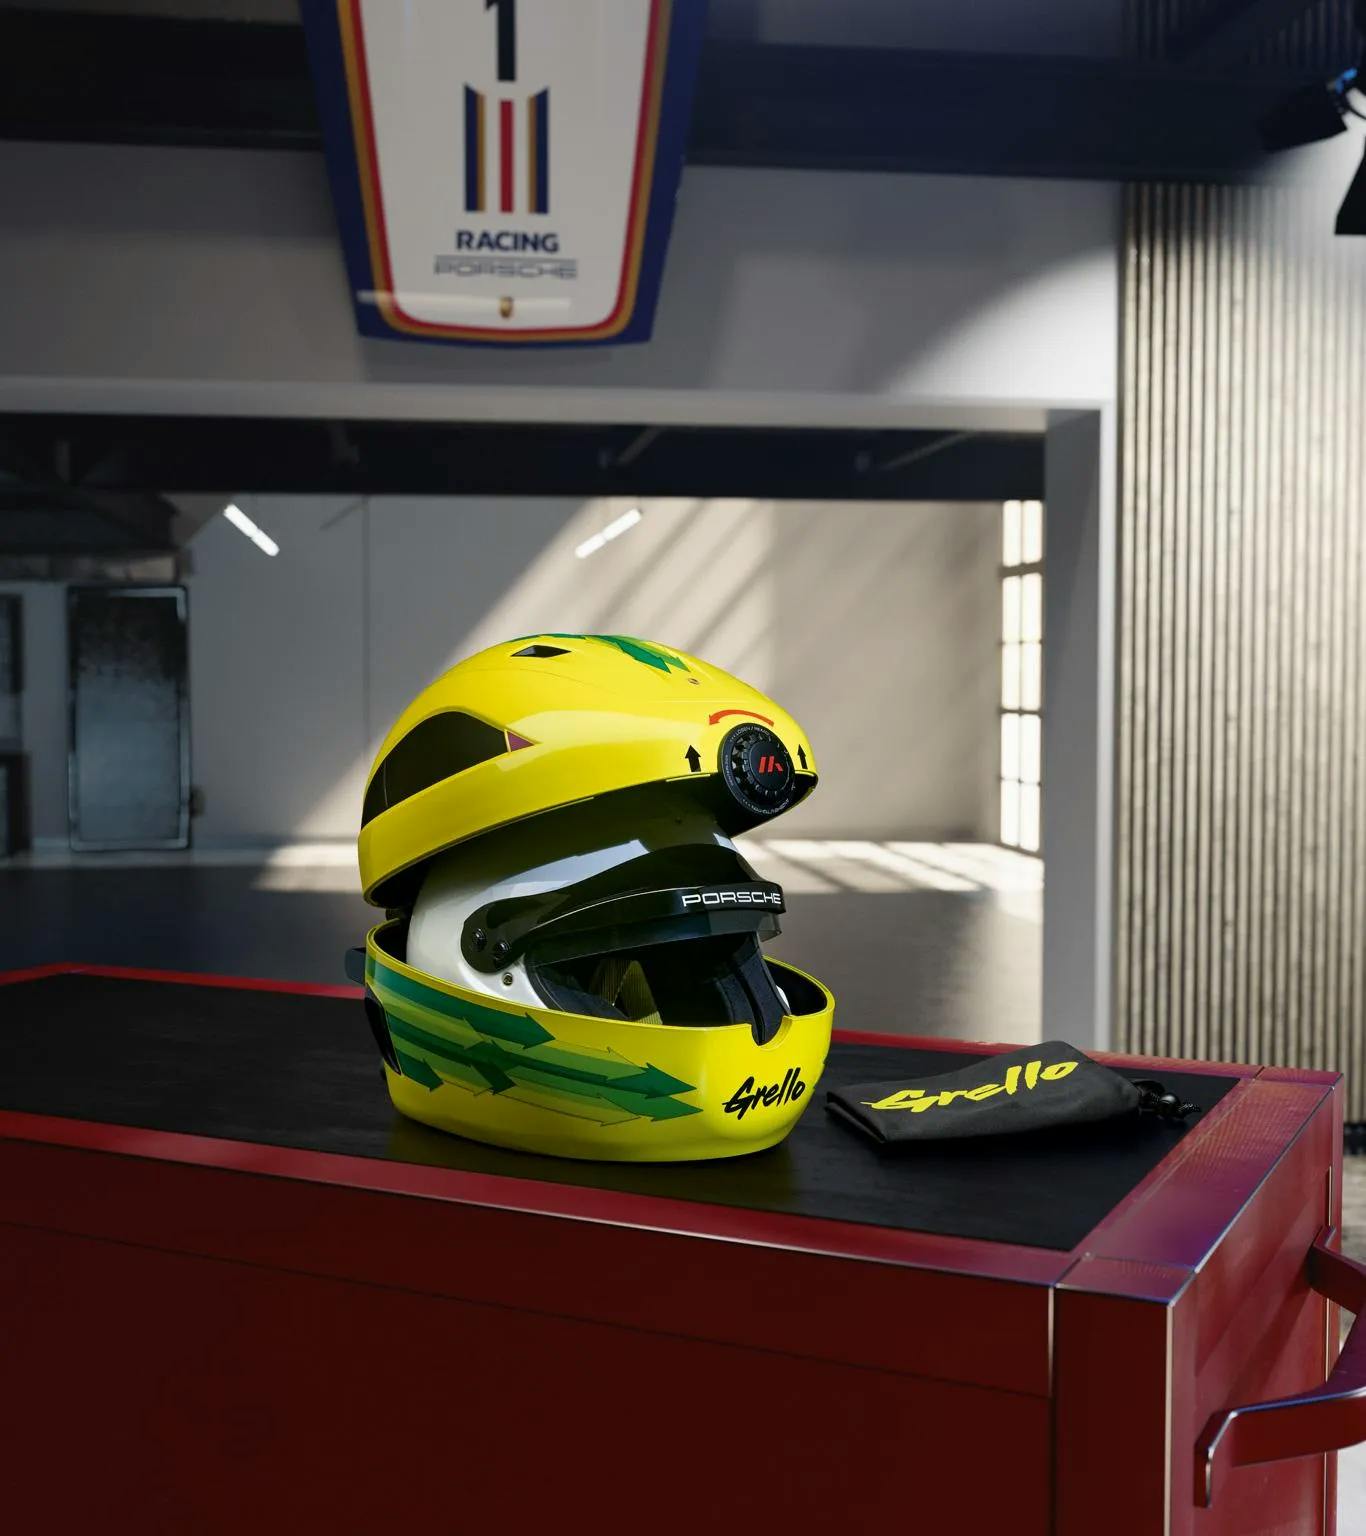 Helmet case in "Grello" design 1